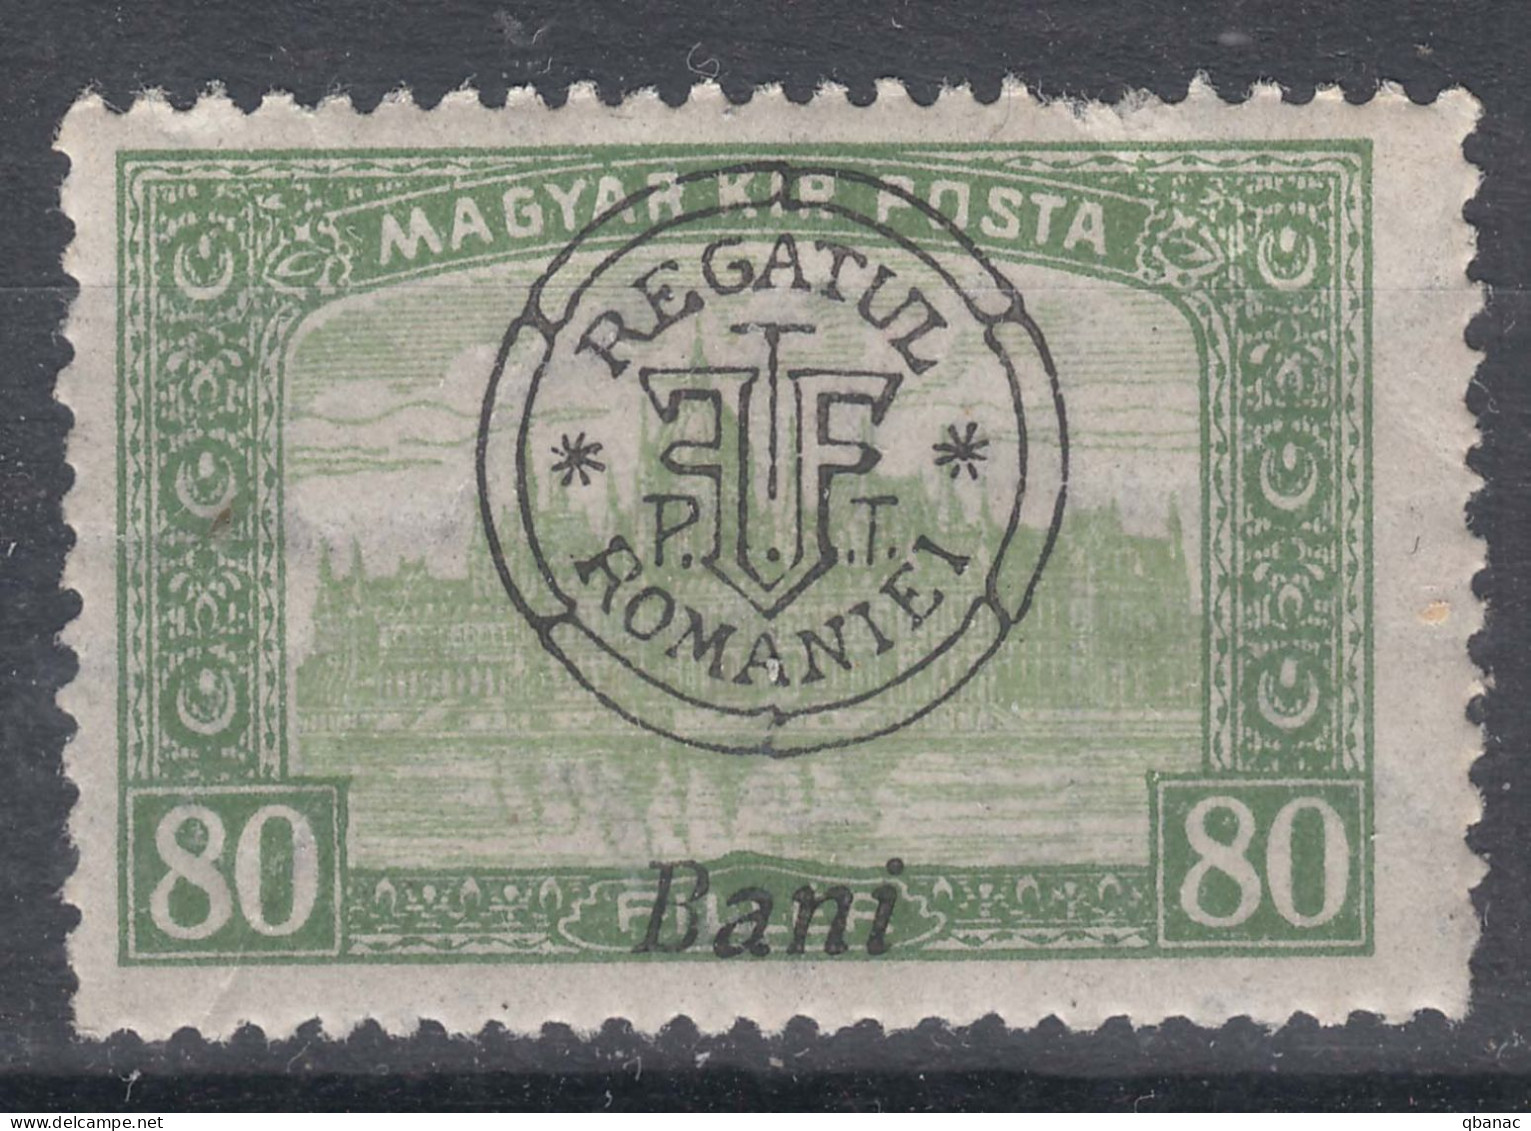 Romania Overprint On Hungary Stamps Occupation Transylvania 1919 Mi#39 II Mint Never Hinged - Transilvania